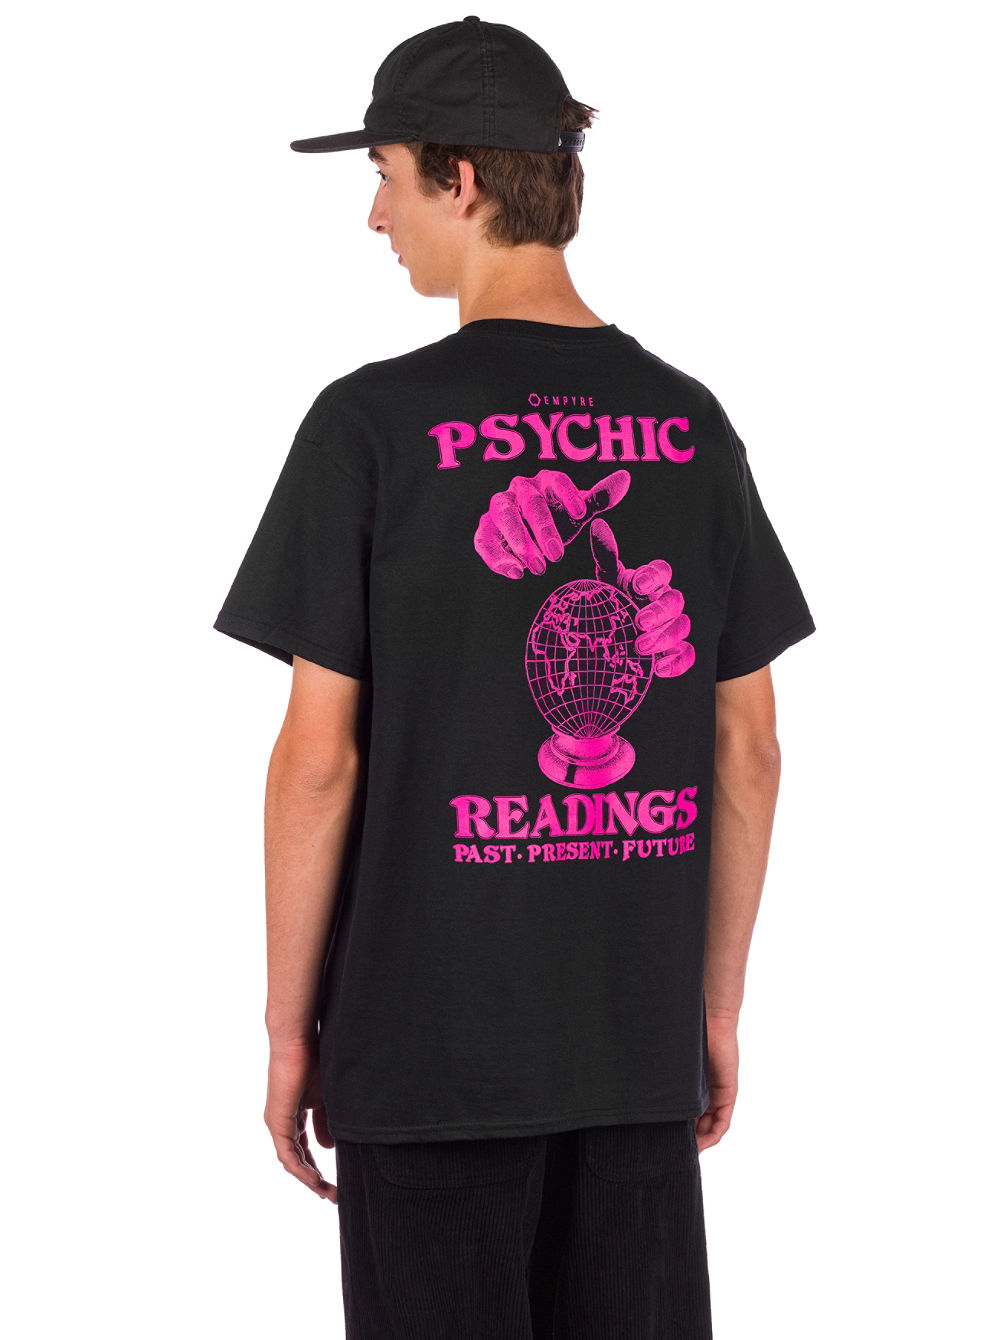 World Readings T-shirt